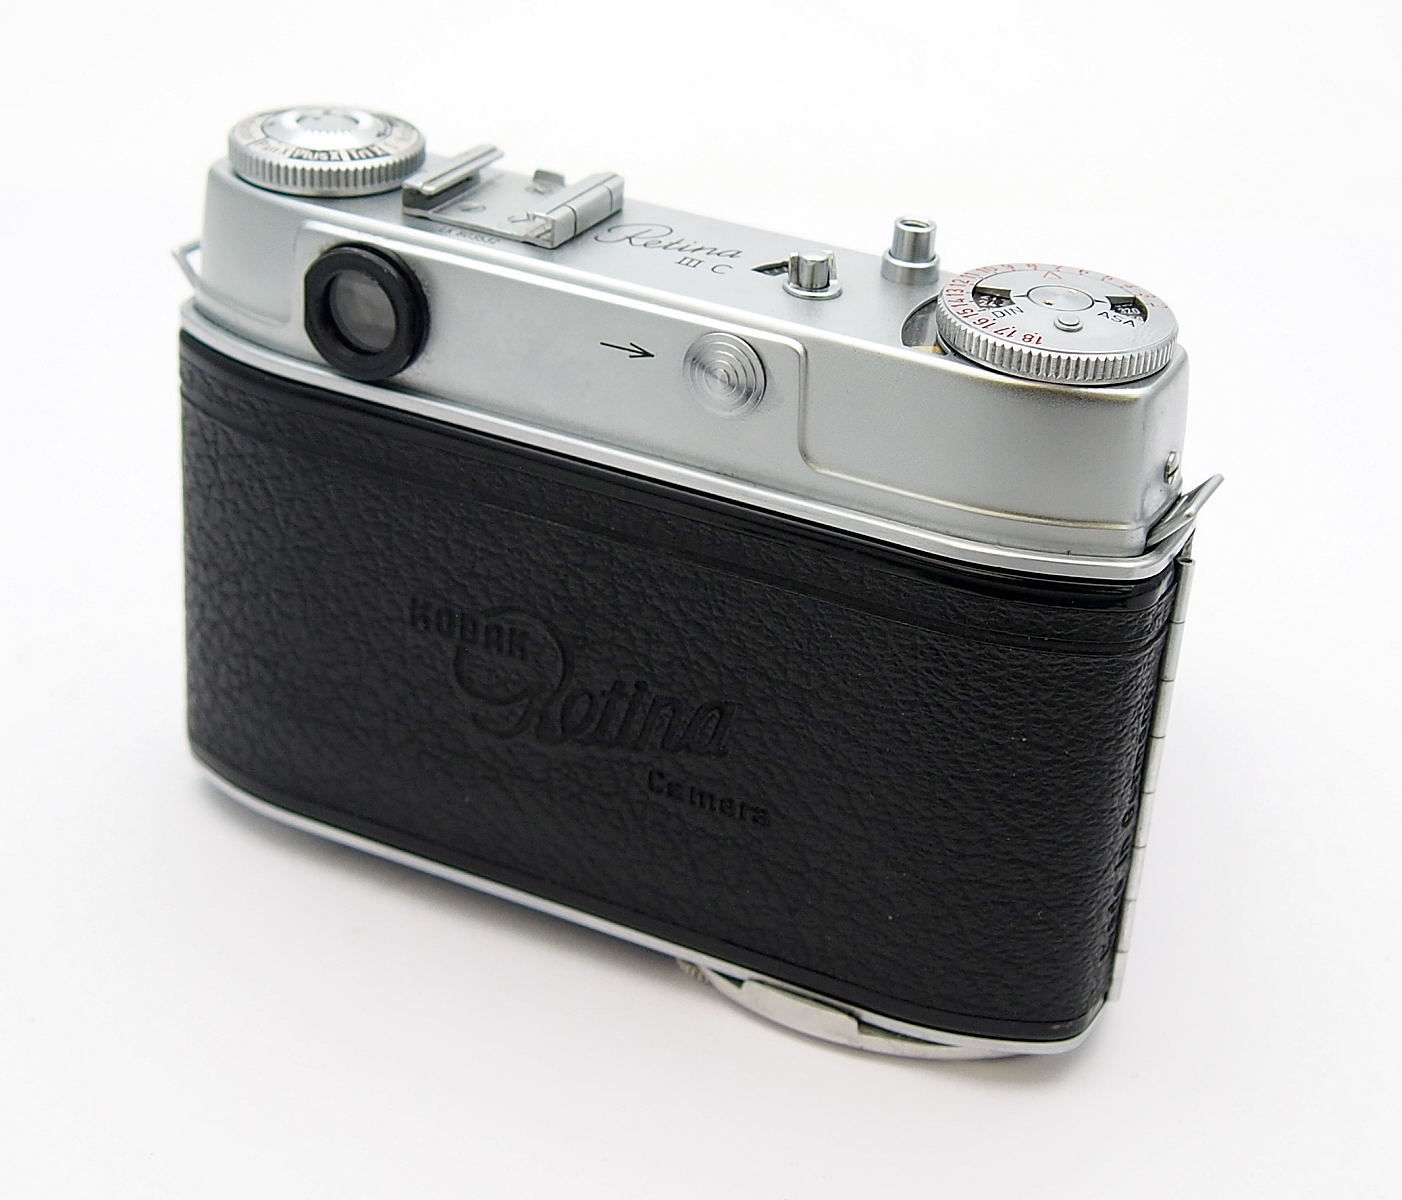 Kodak Retina 111C CRF with 50mm F2 Xenon #9728